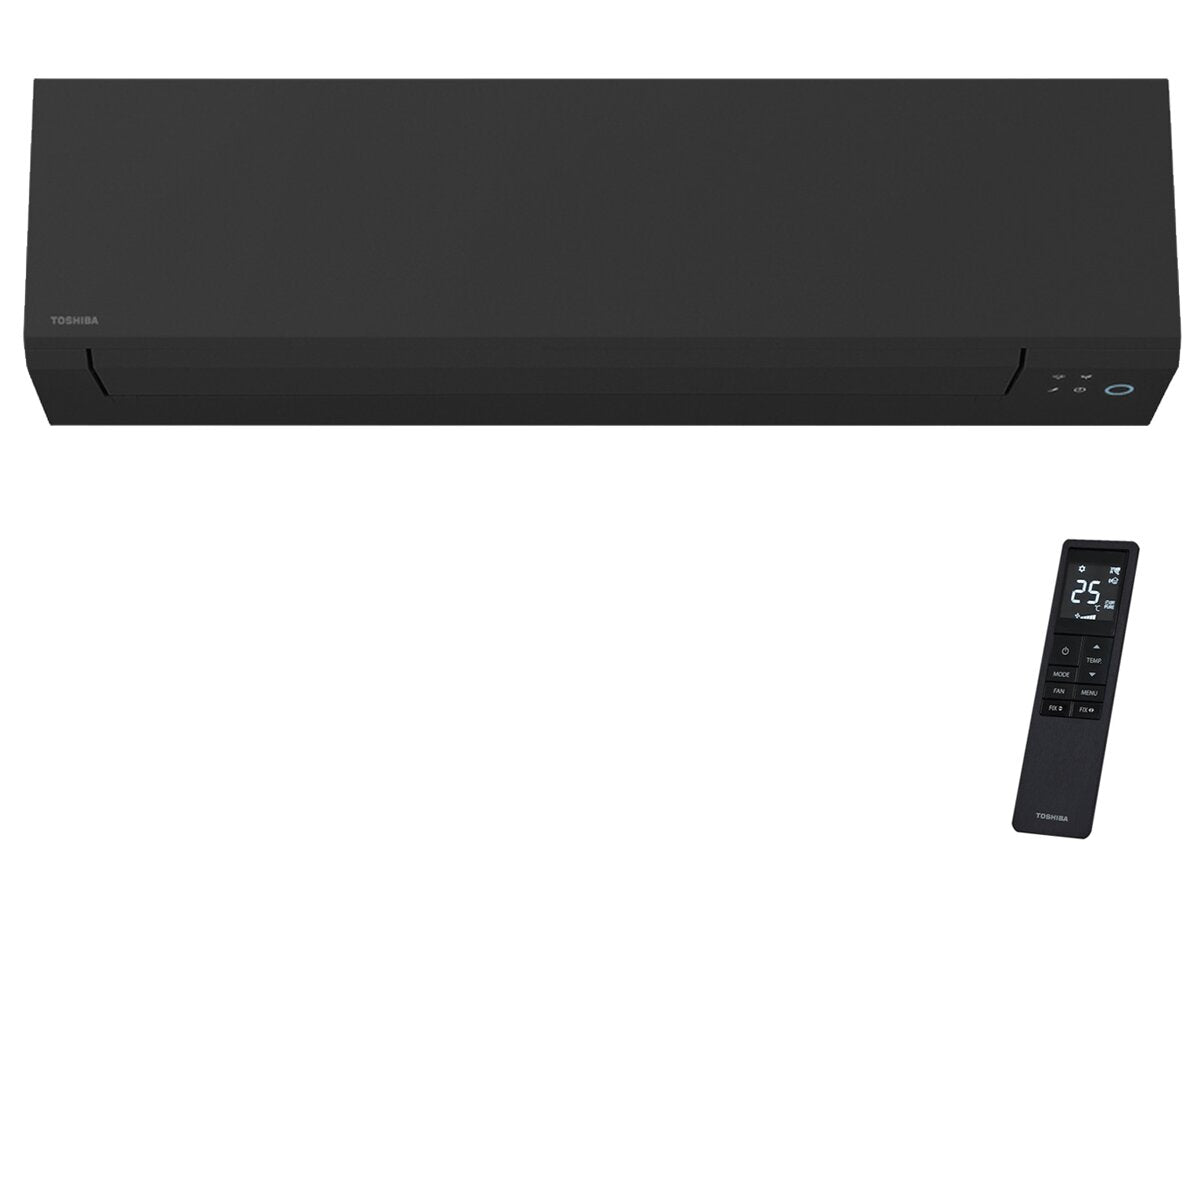 Toshiba SHORAI Edge Black dual split air conditioner 7000+7000 BTU inverter A++ wifi external unit 4 kW